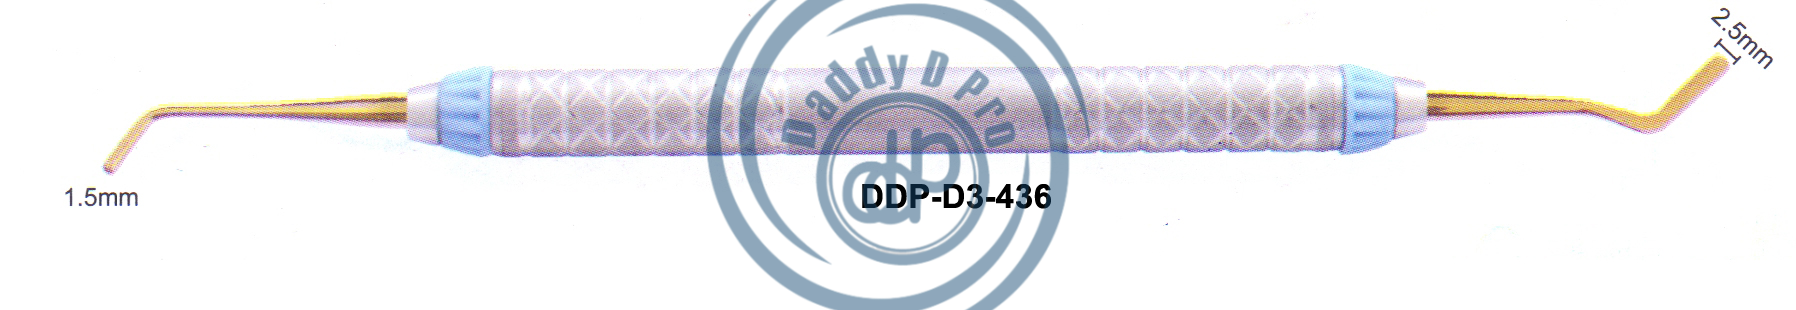 images/DDP-D3-436.png